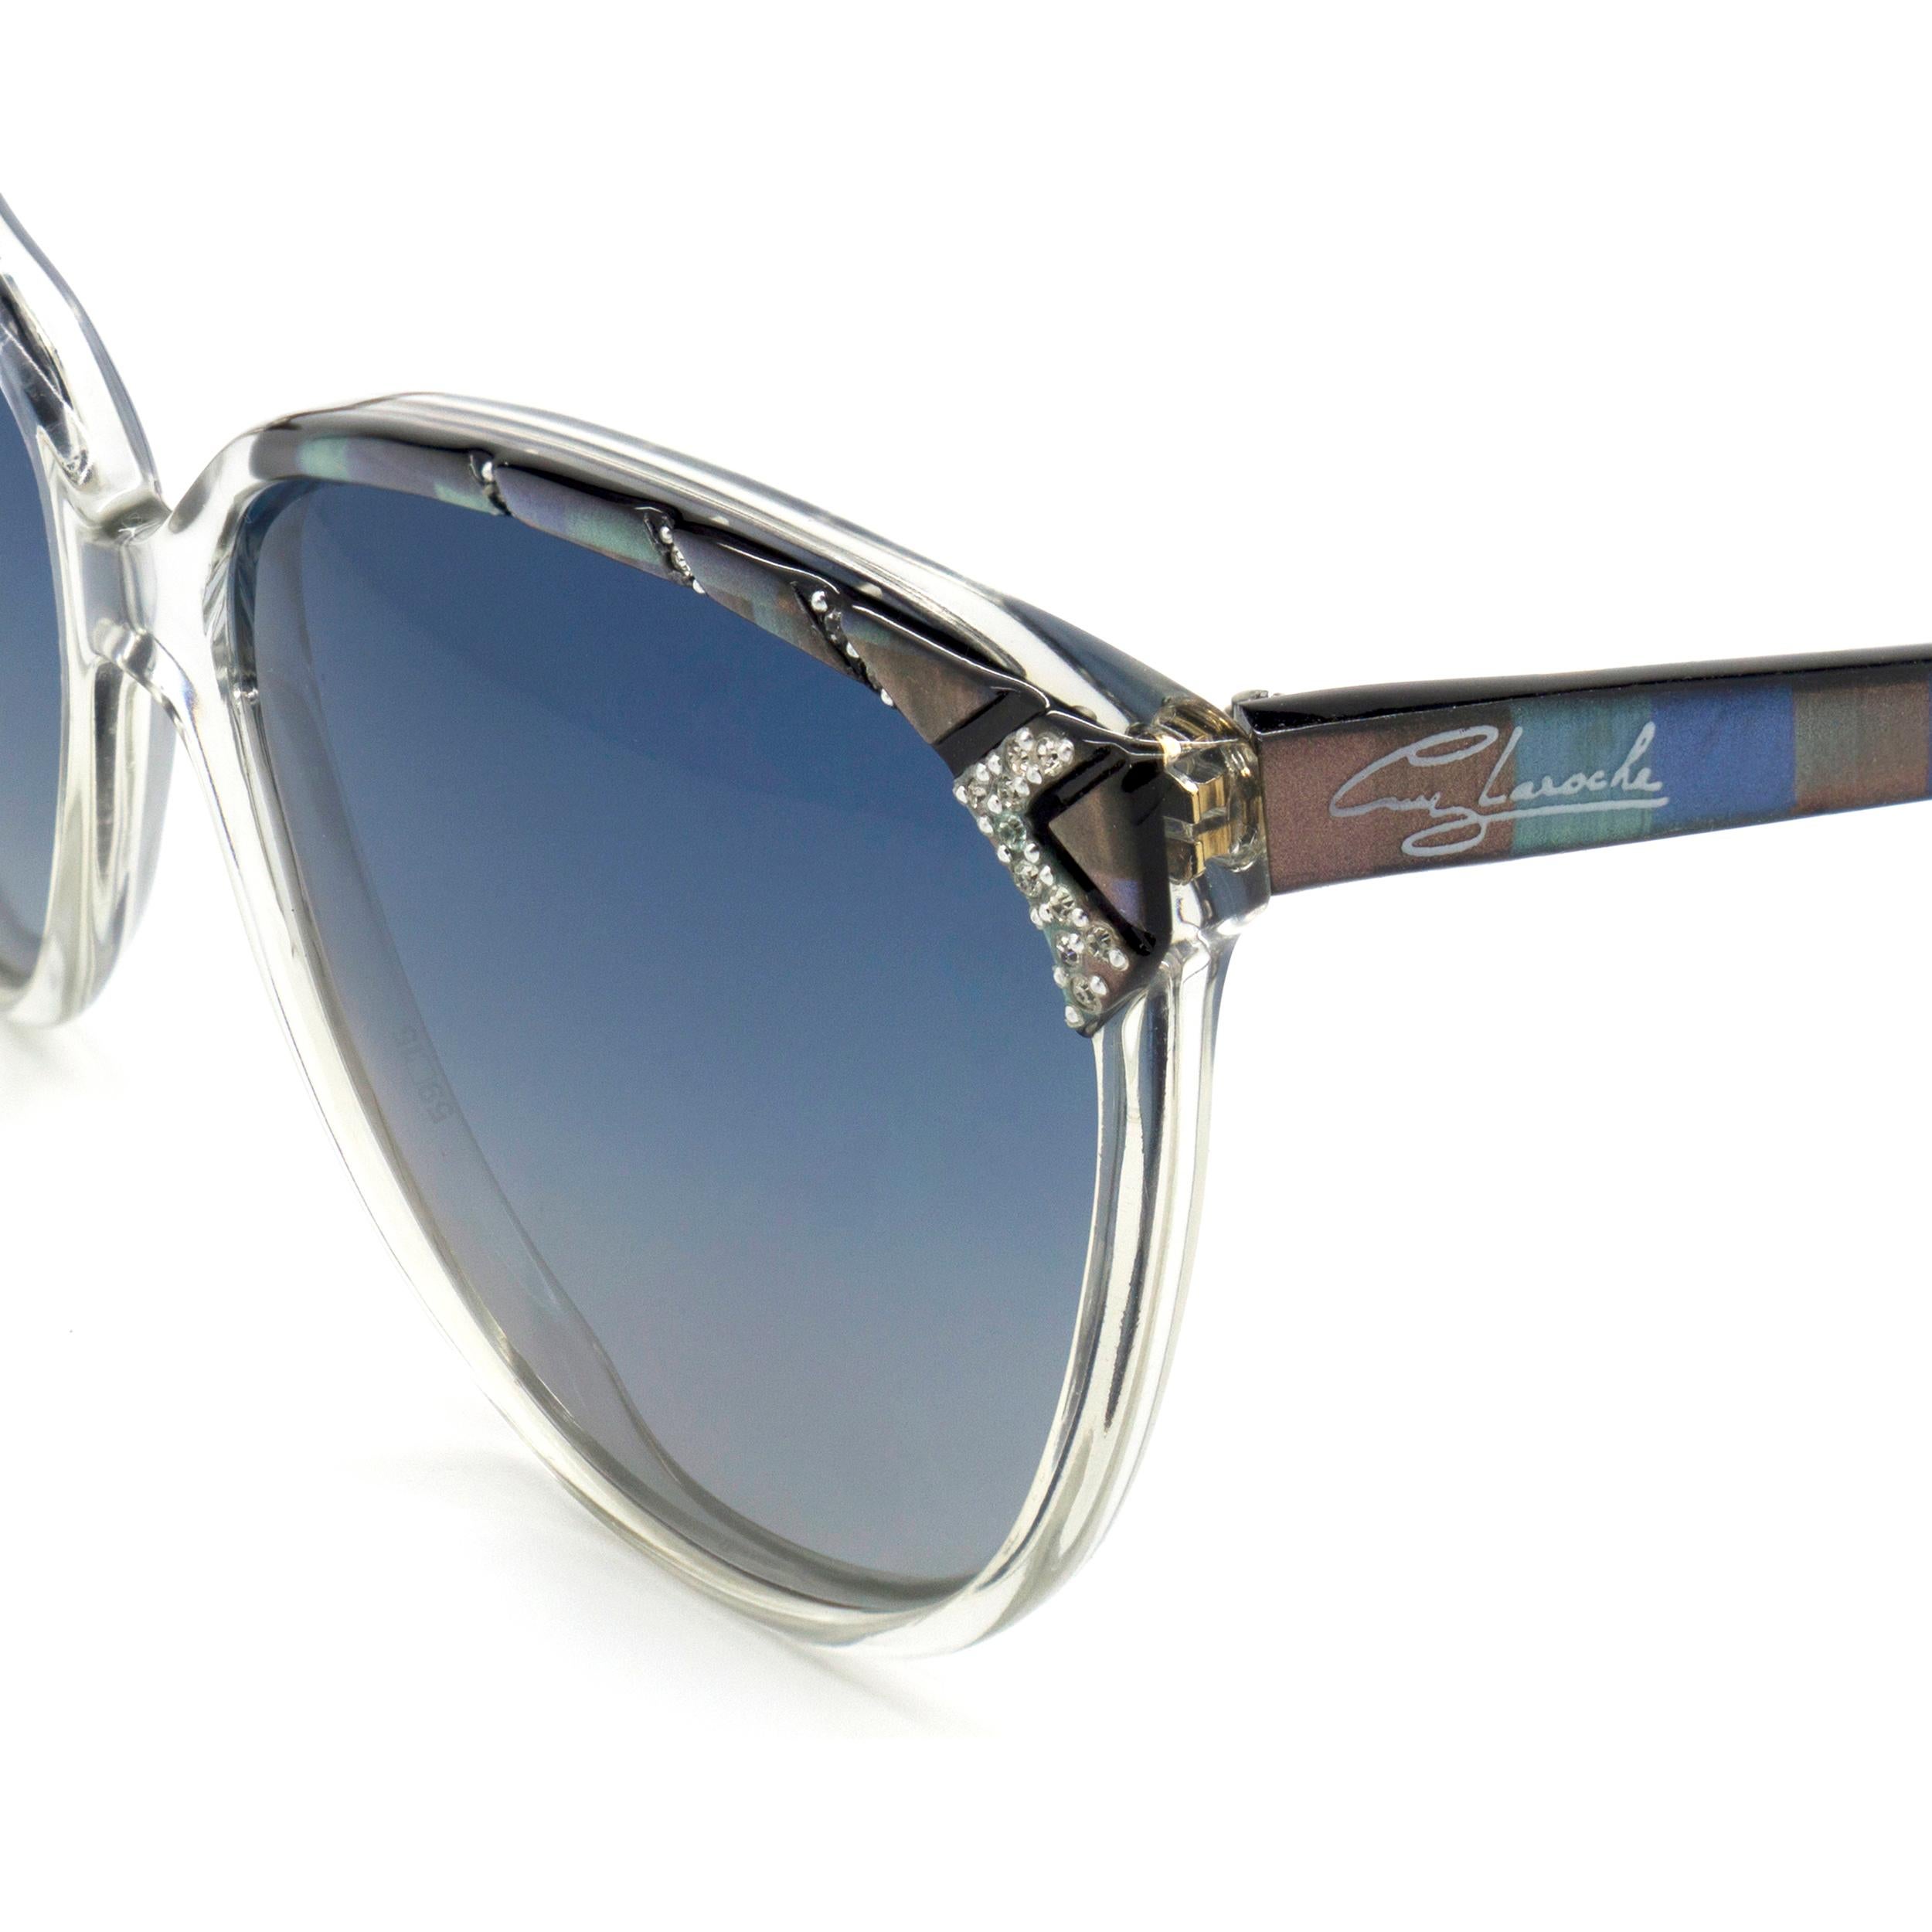 Gray Guy Laroche 80s vintage sunglasses For Sale